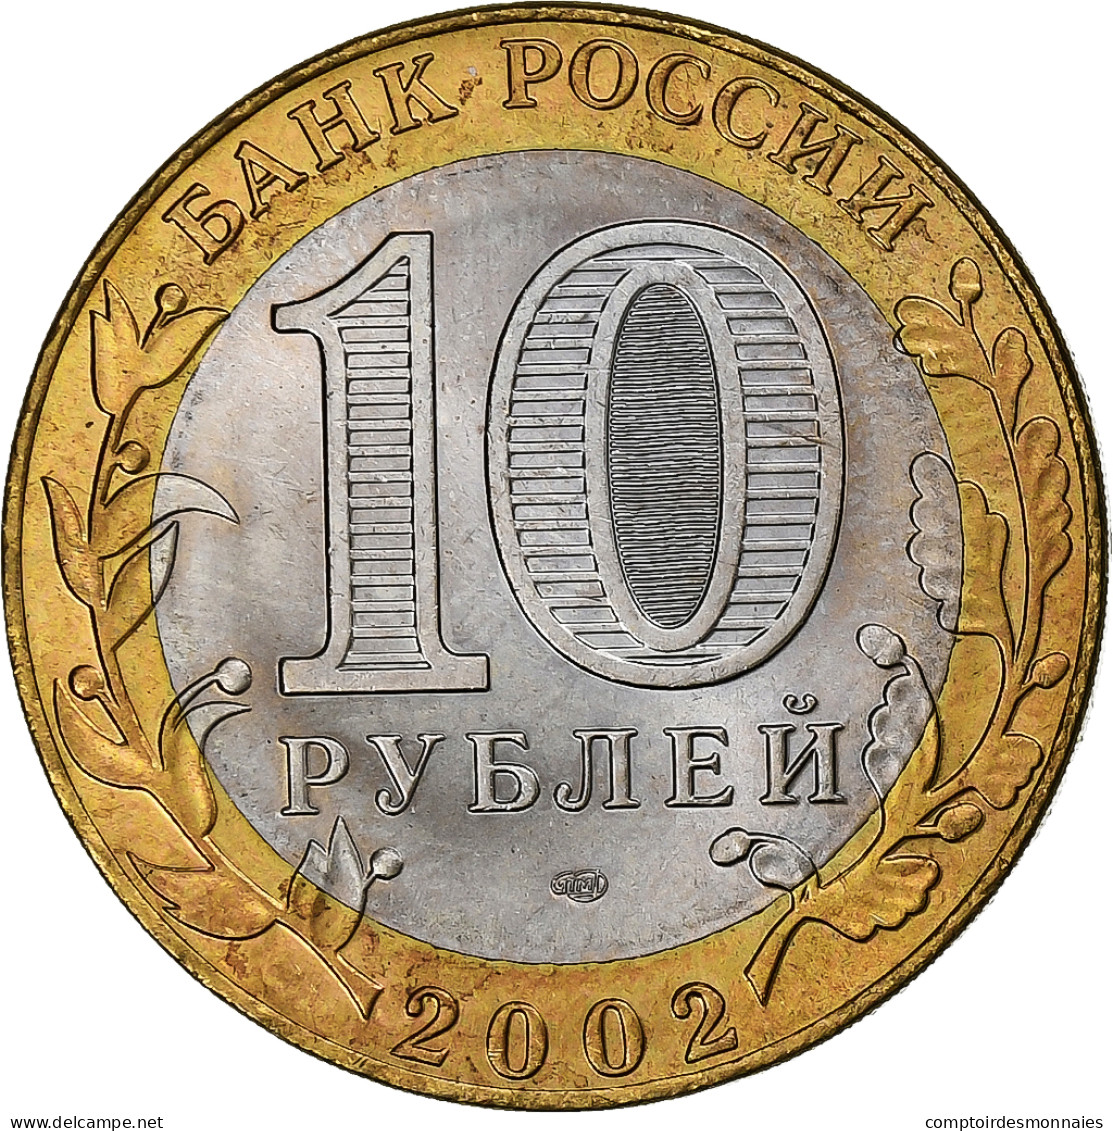 Russie, 10 Roubles, 2002, St. Petersburg, Bimétallique, SUP, KM:751 - Russland